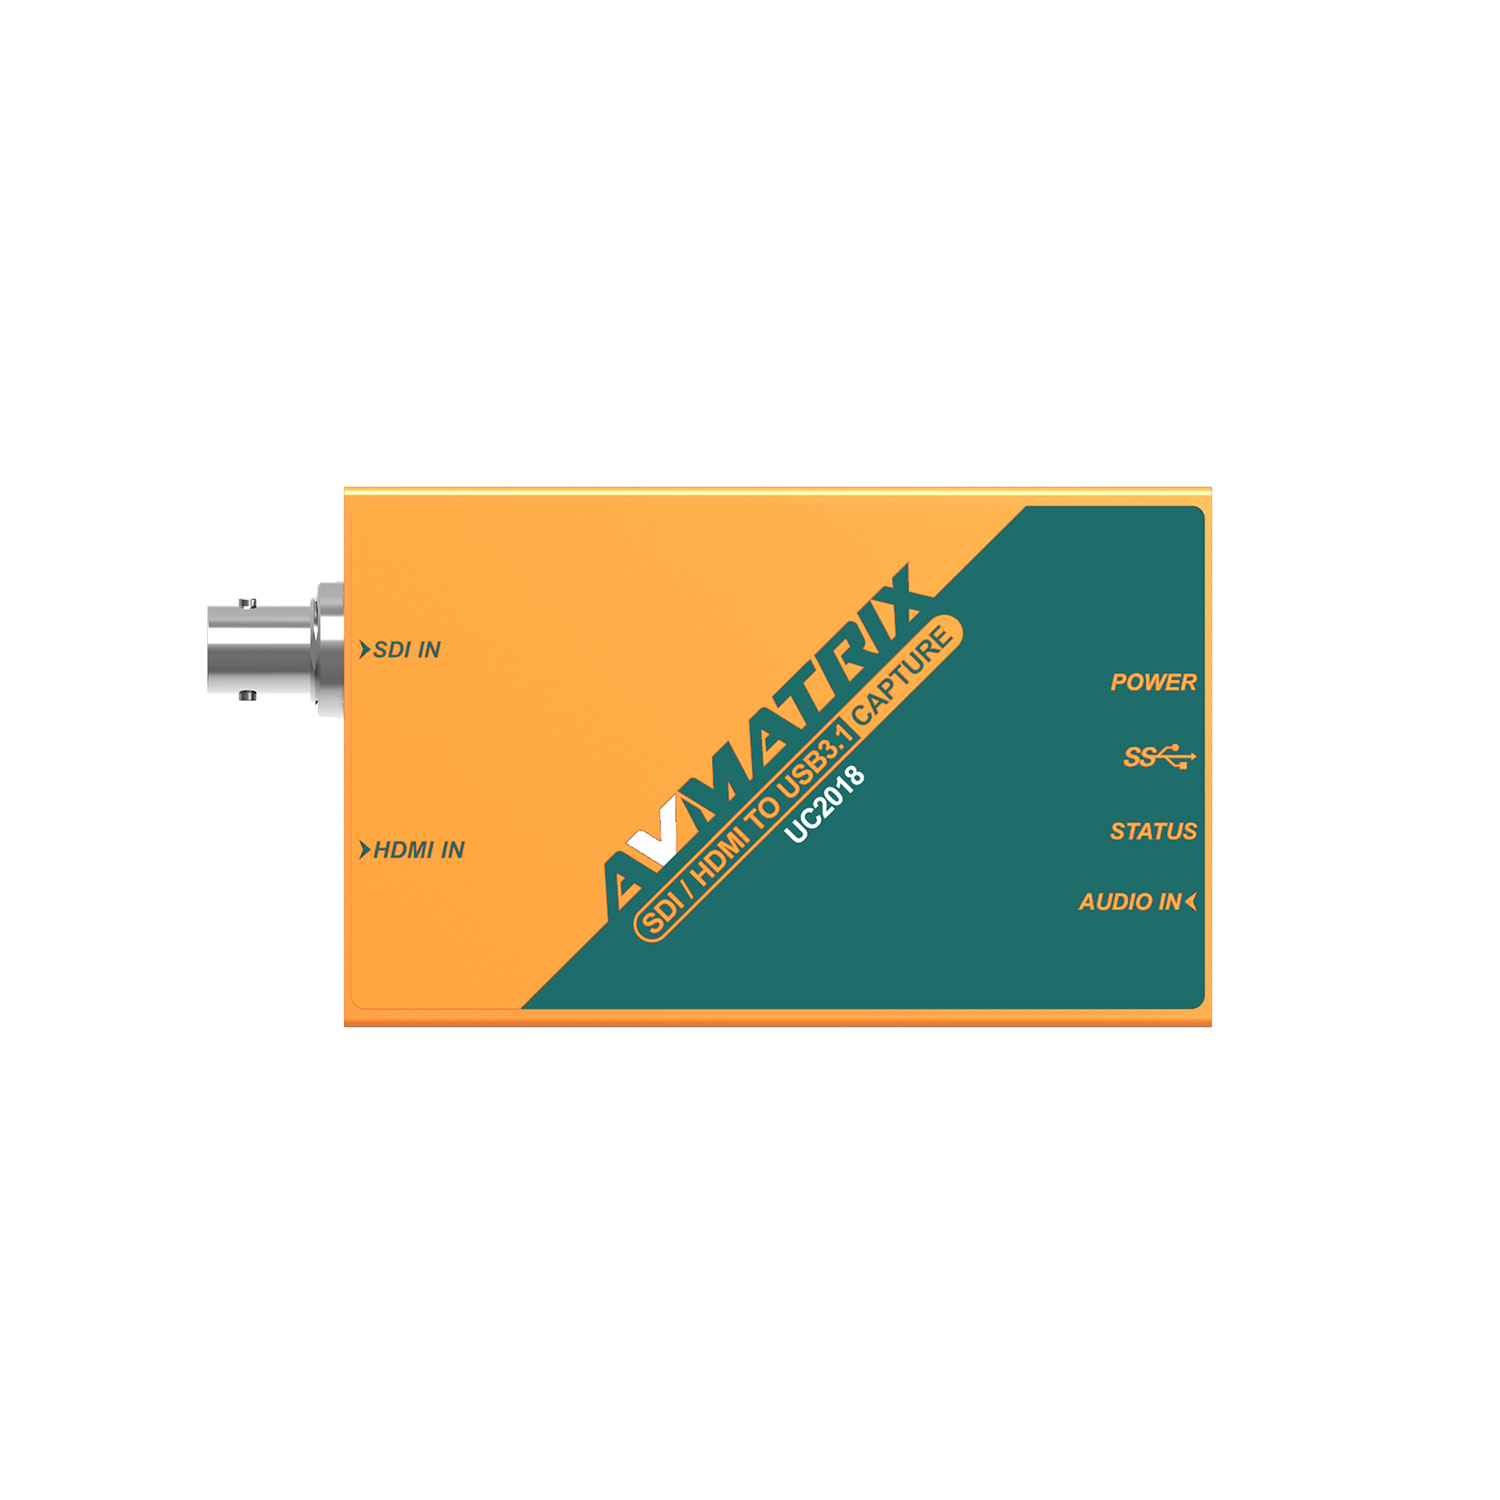 UC2018 – SDI/HDMI to USB3.1 Gen 1 Capture